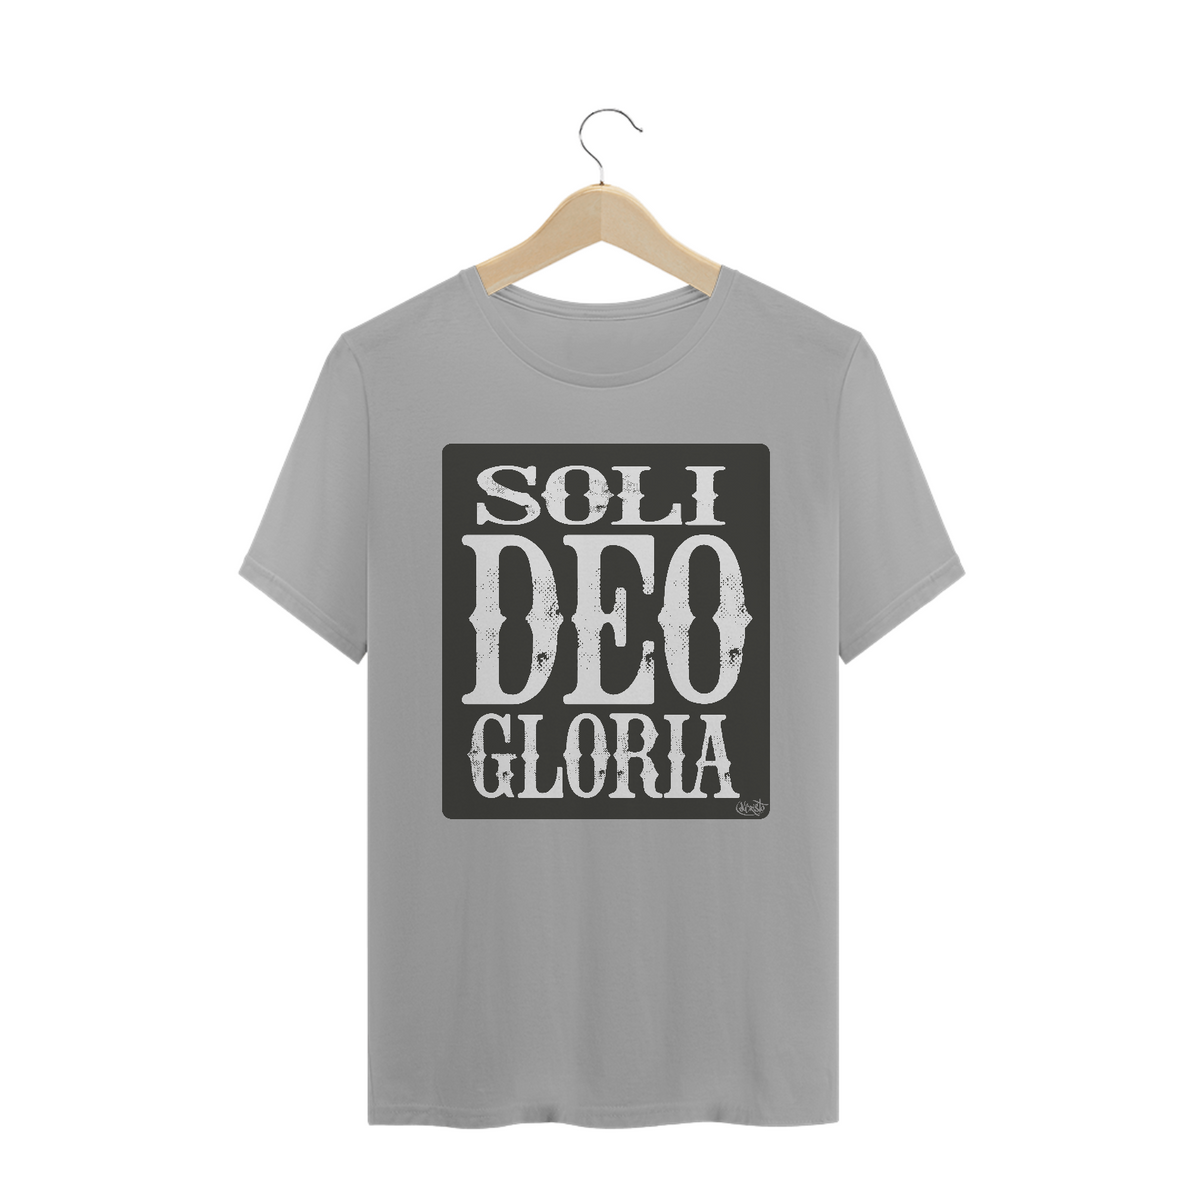 Nome do produto: Camiseta Soli Deo Gloria (cores claras)